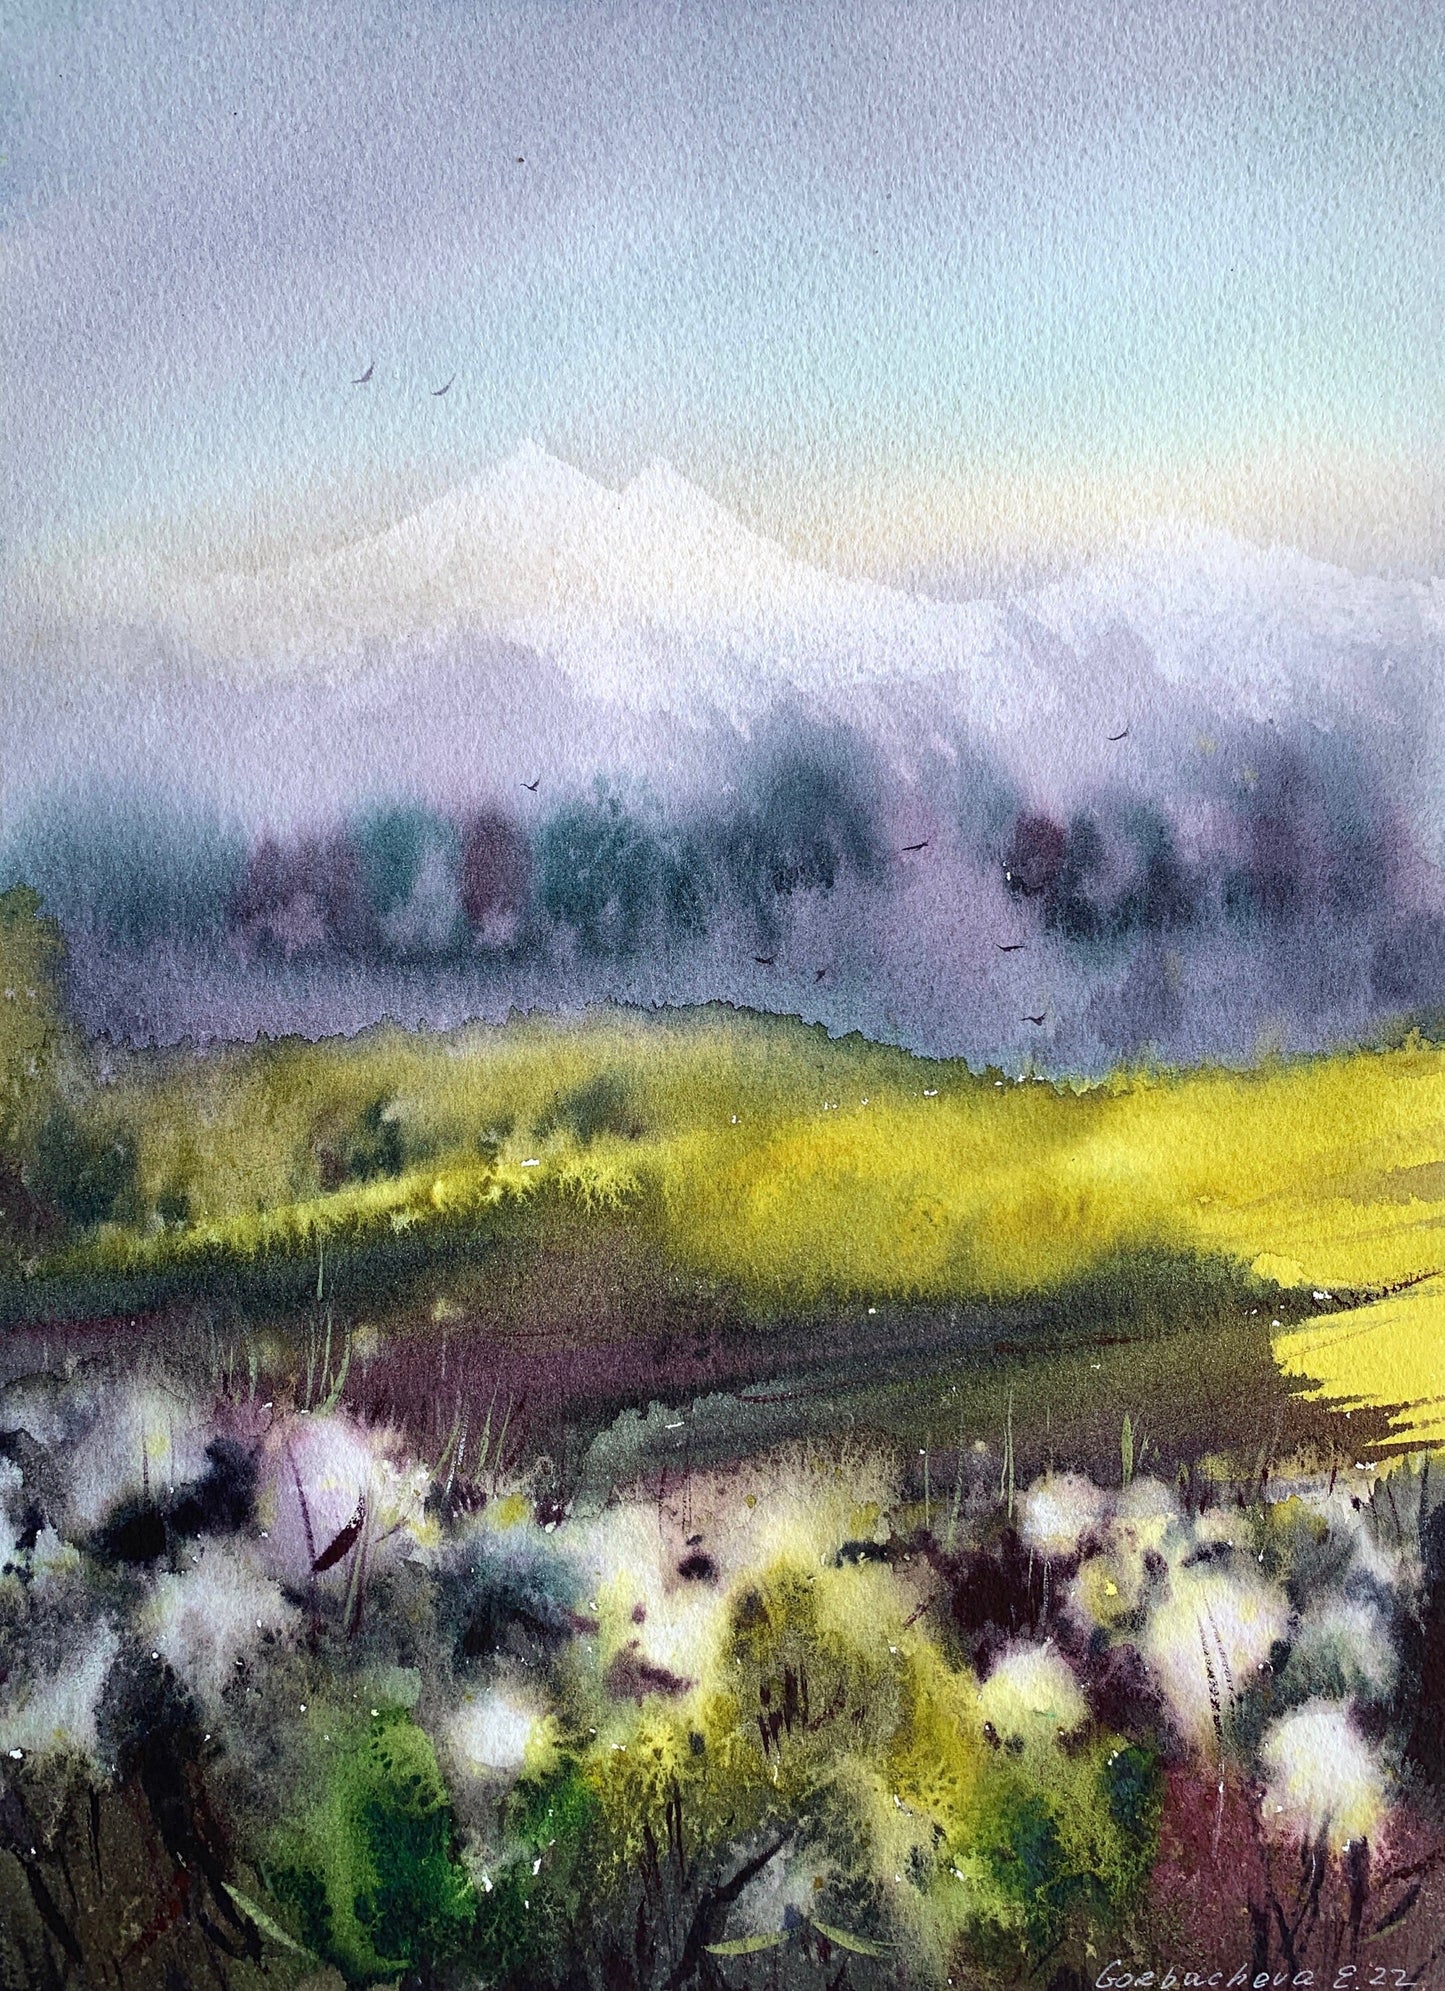 Cotton Field Painting Watercolor Original, Abstract Mountain Landscape, Green Mountains, Modern Art Decor